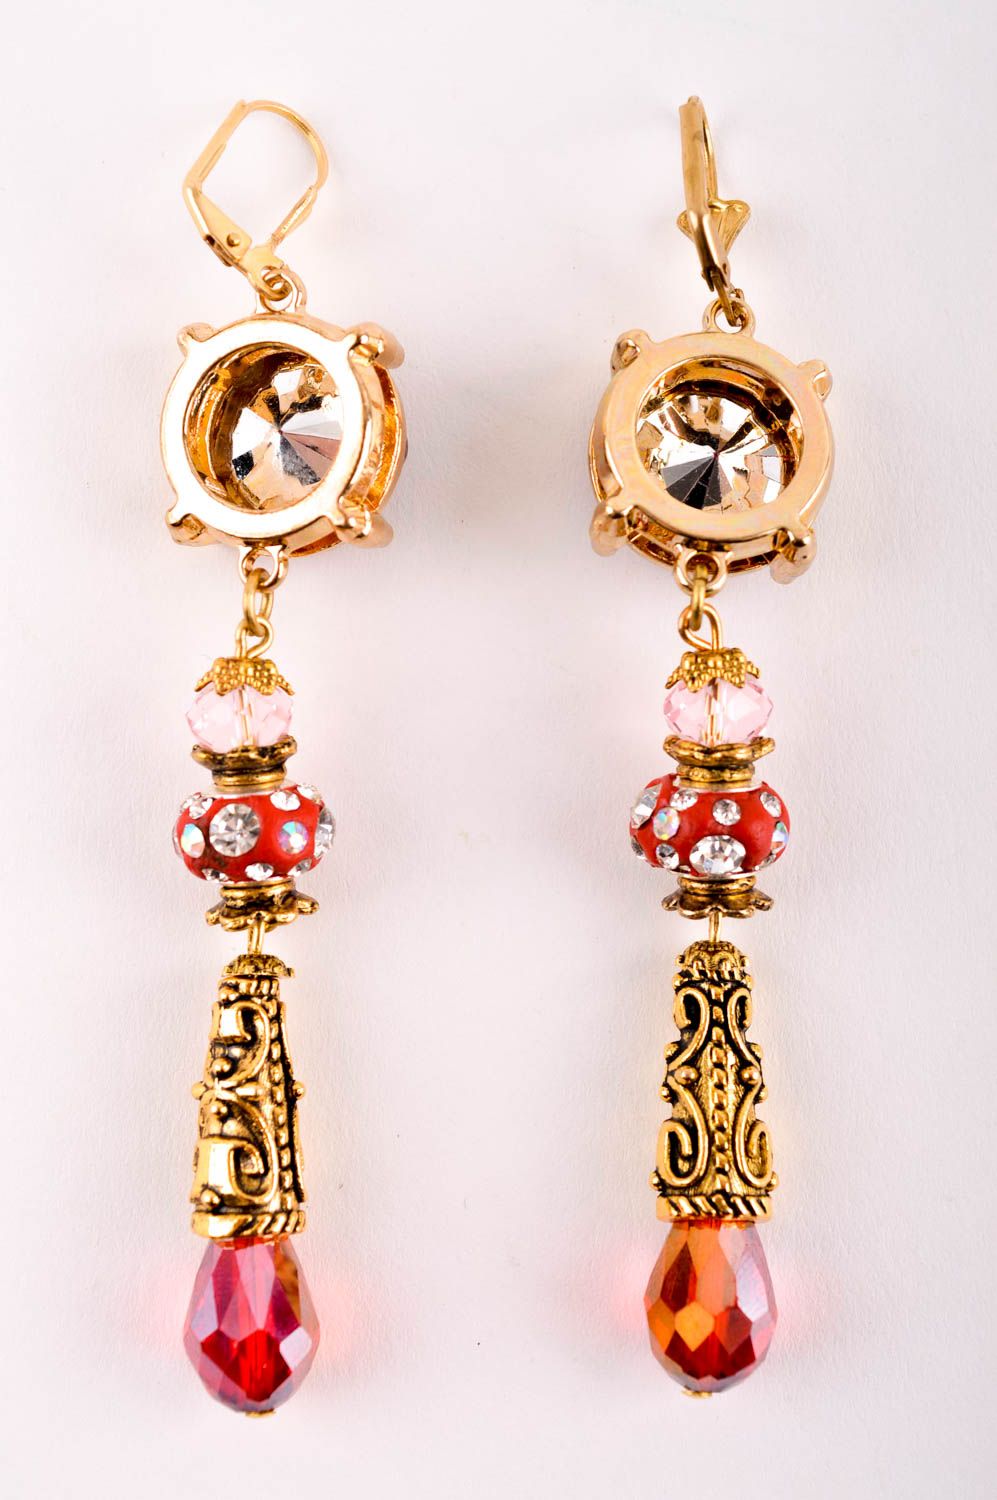 Handmade earrings designer earrings with charms unusual gift for girls photo 4